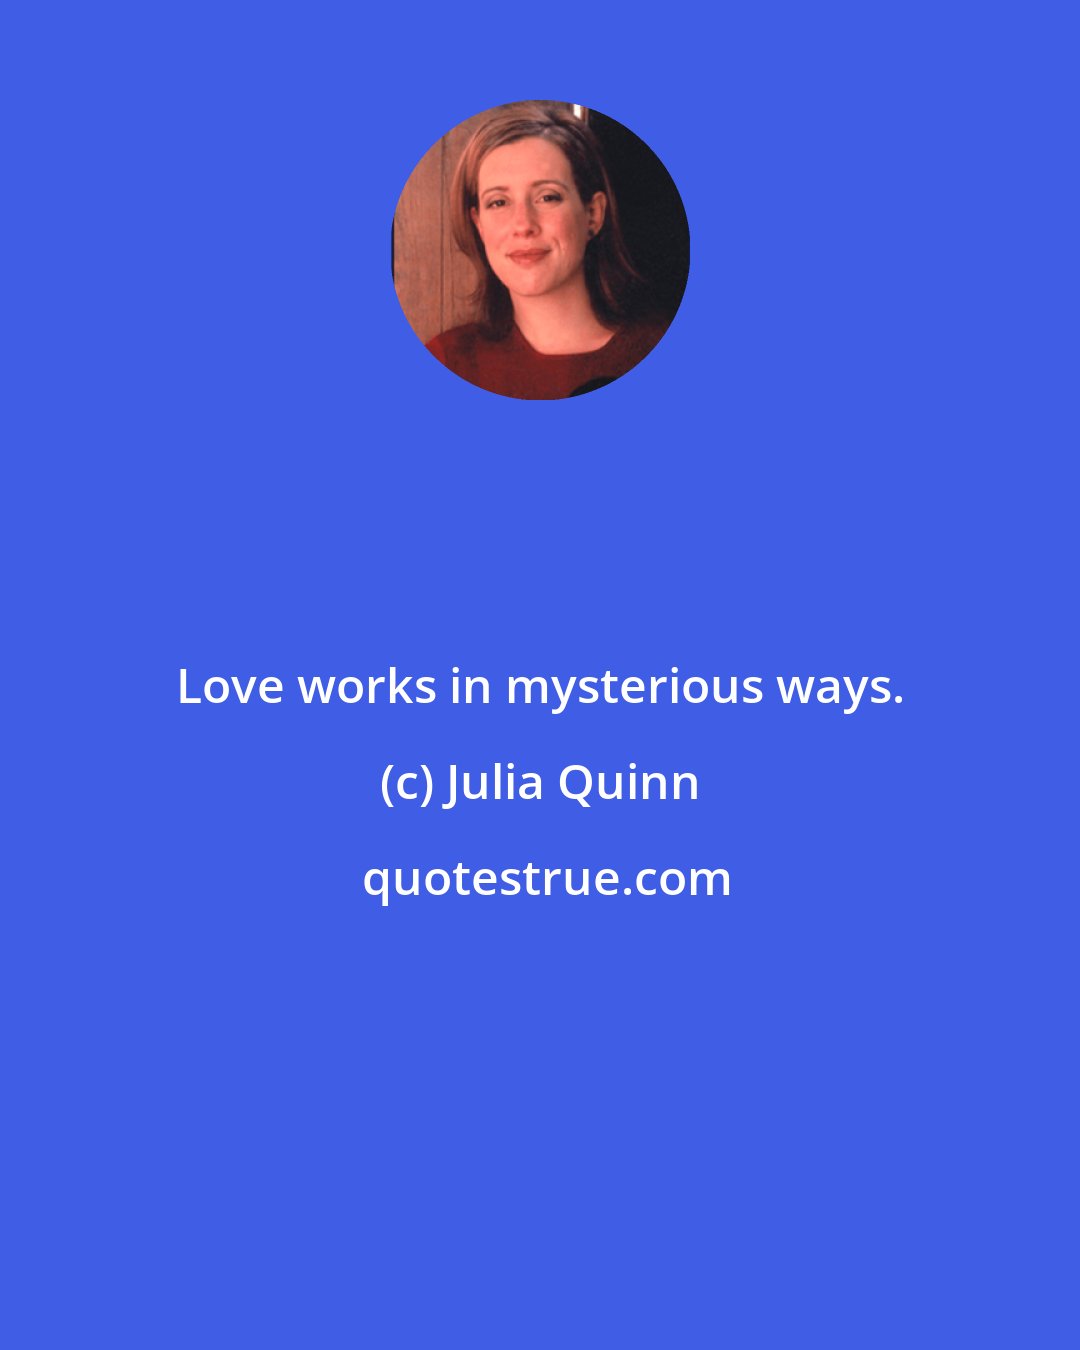 Julia Quinn: Love works in mysterious ways.